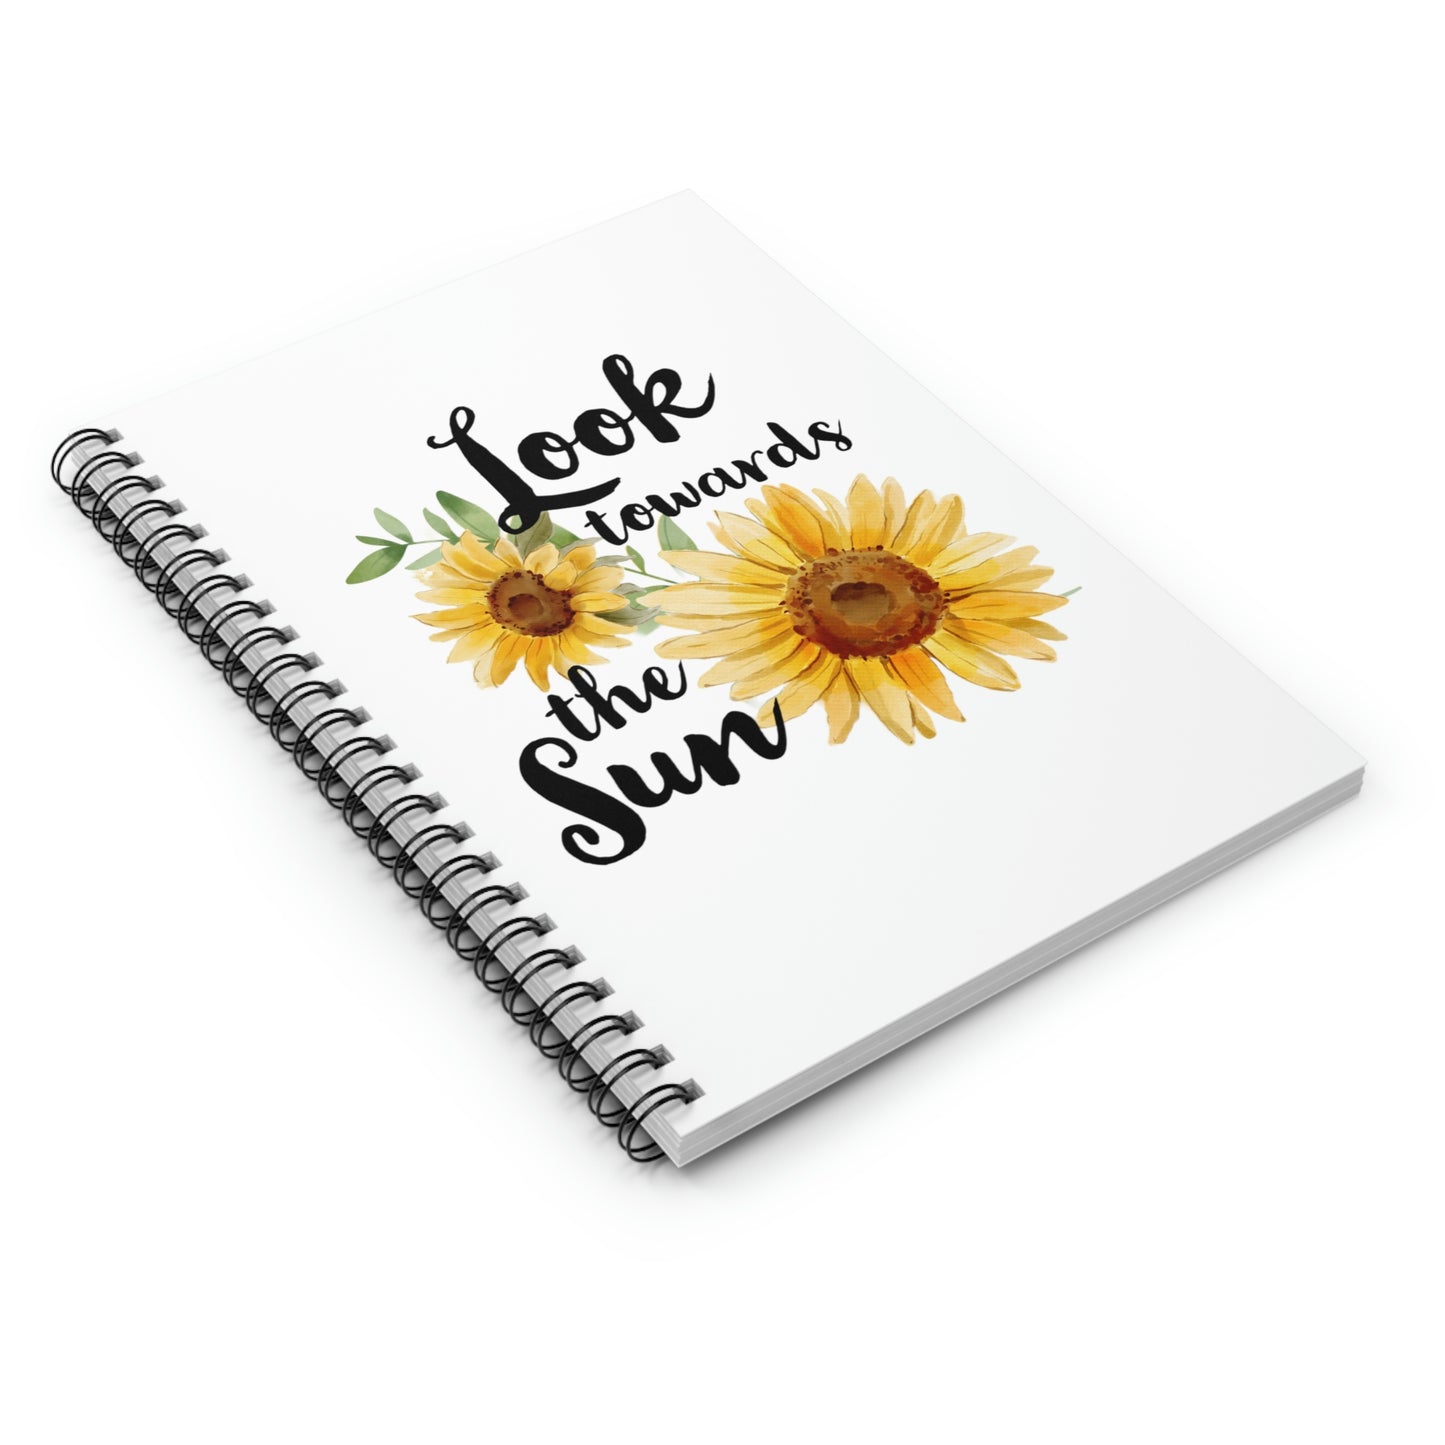 Look Towards the Sun(flower) Spiral Notebook - Ruled Line